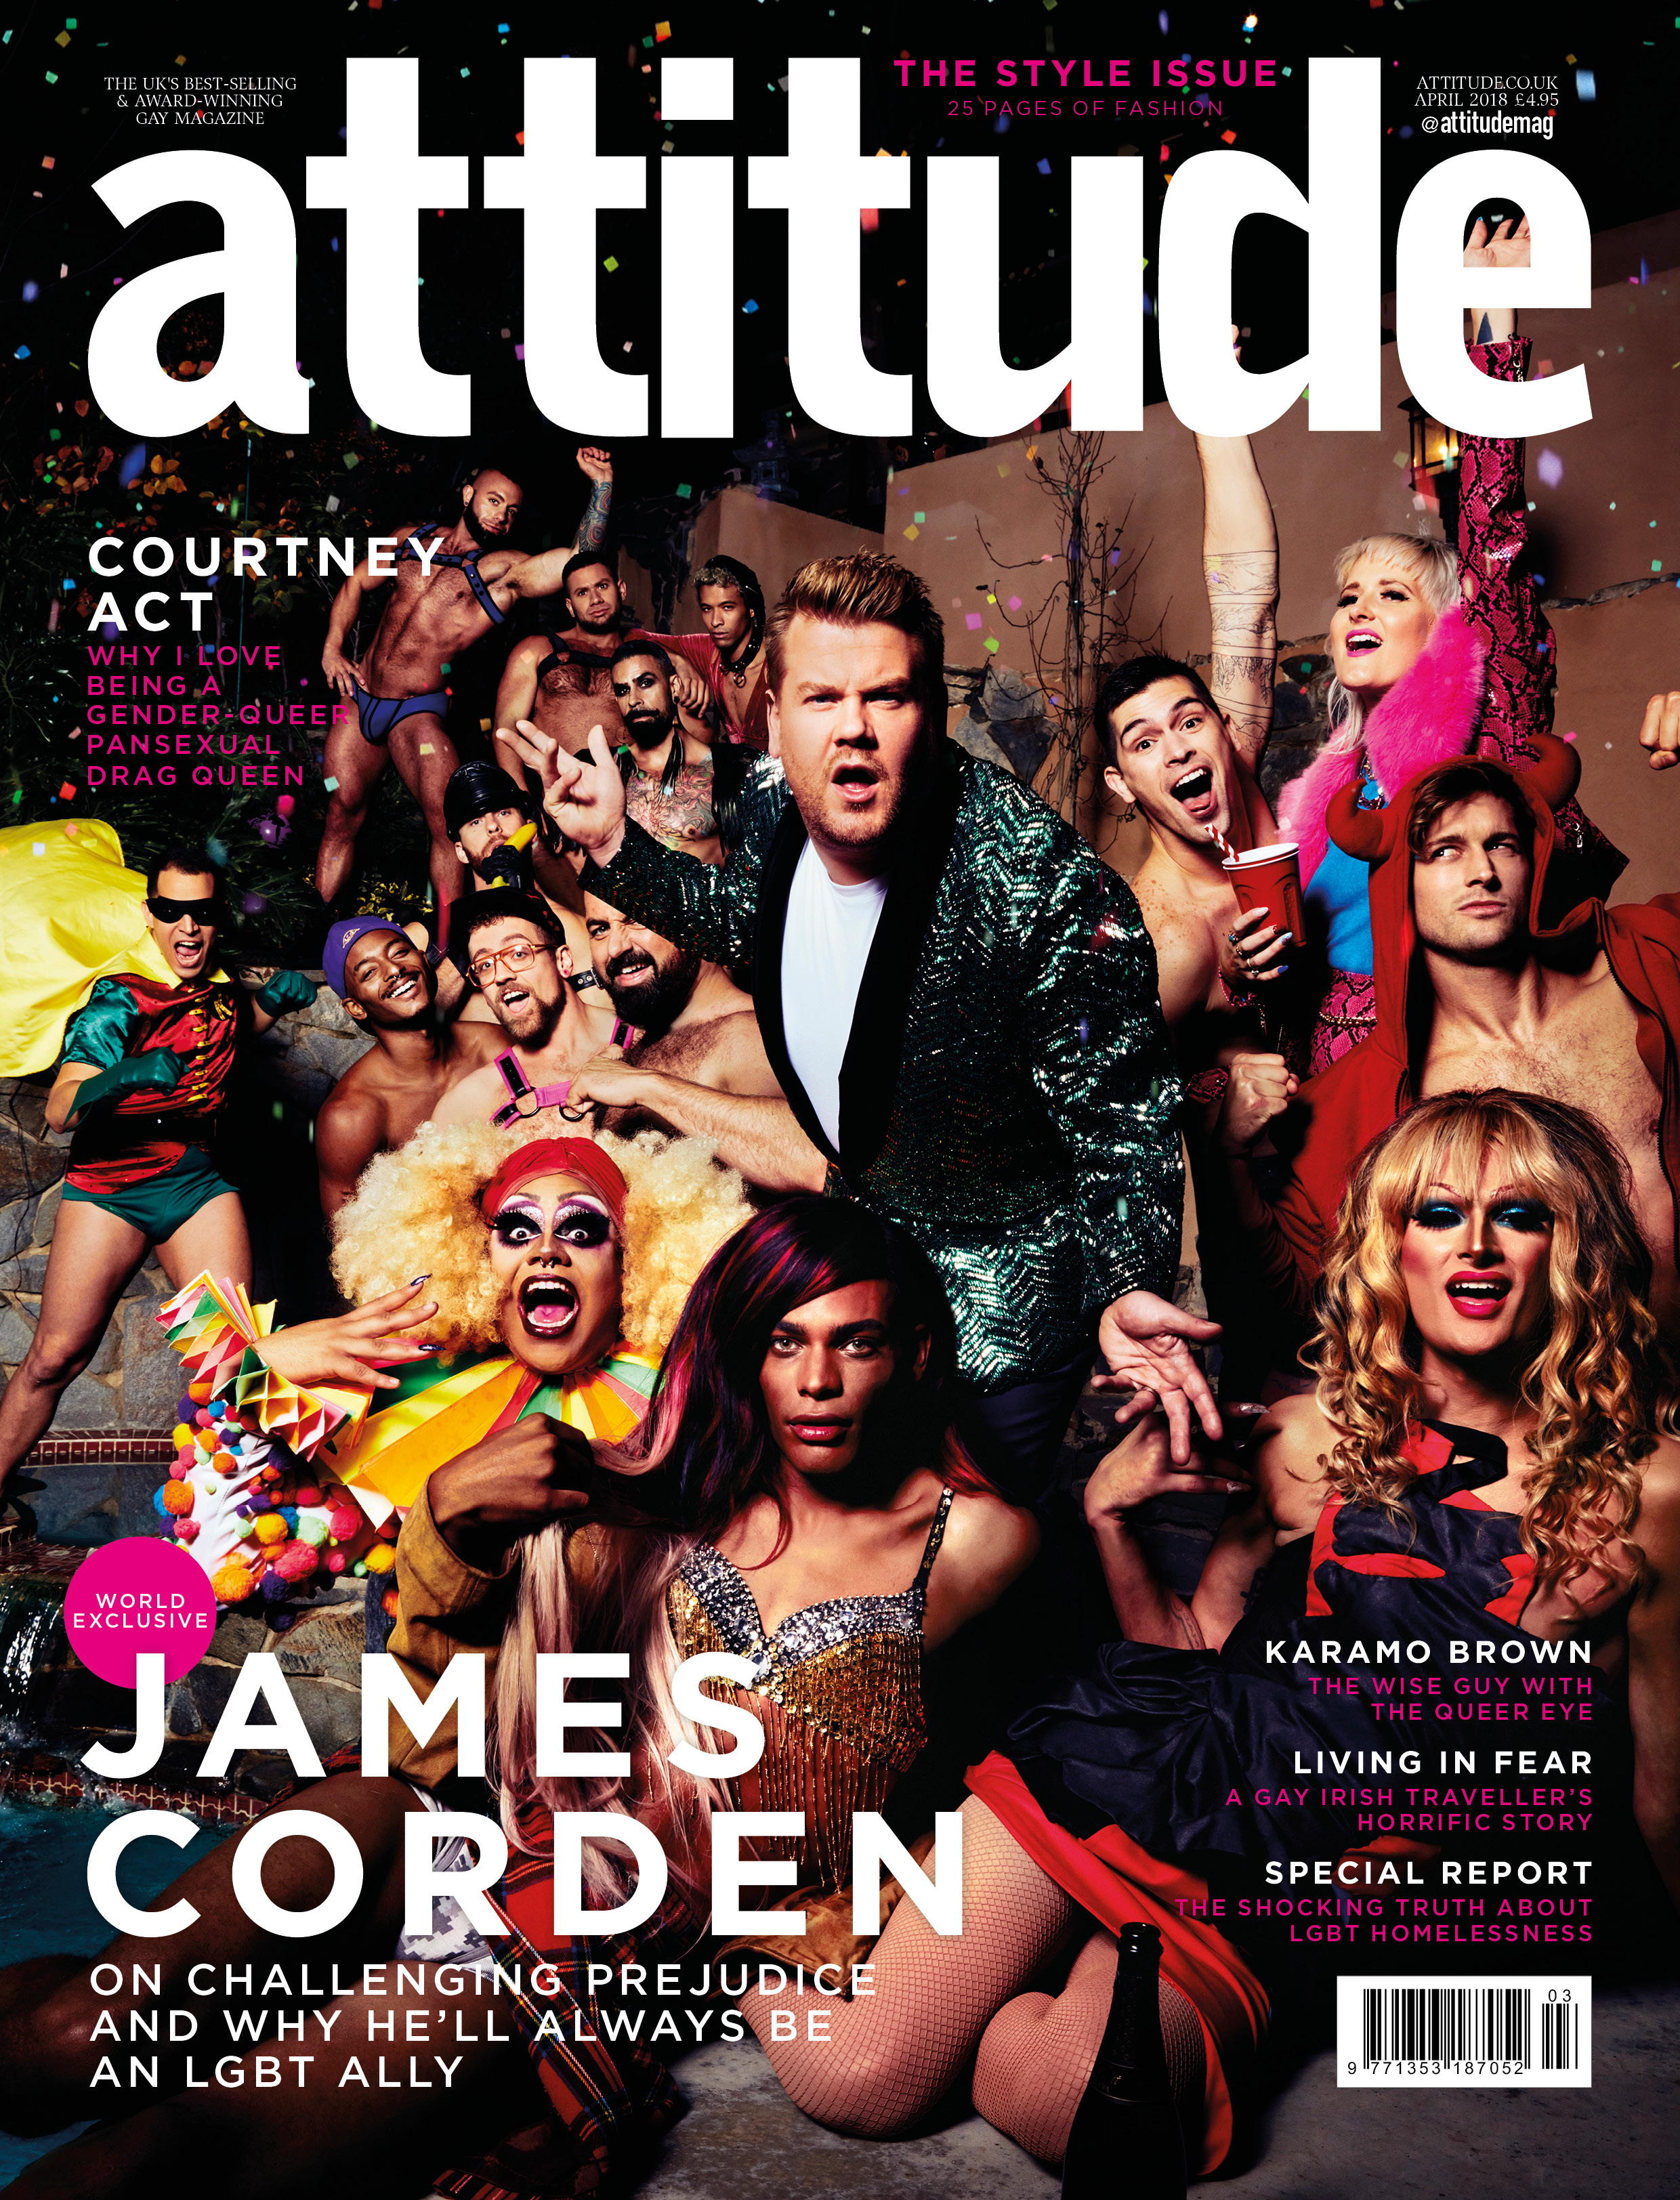 James Corden on the cover of Attitude magazine 